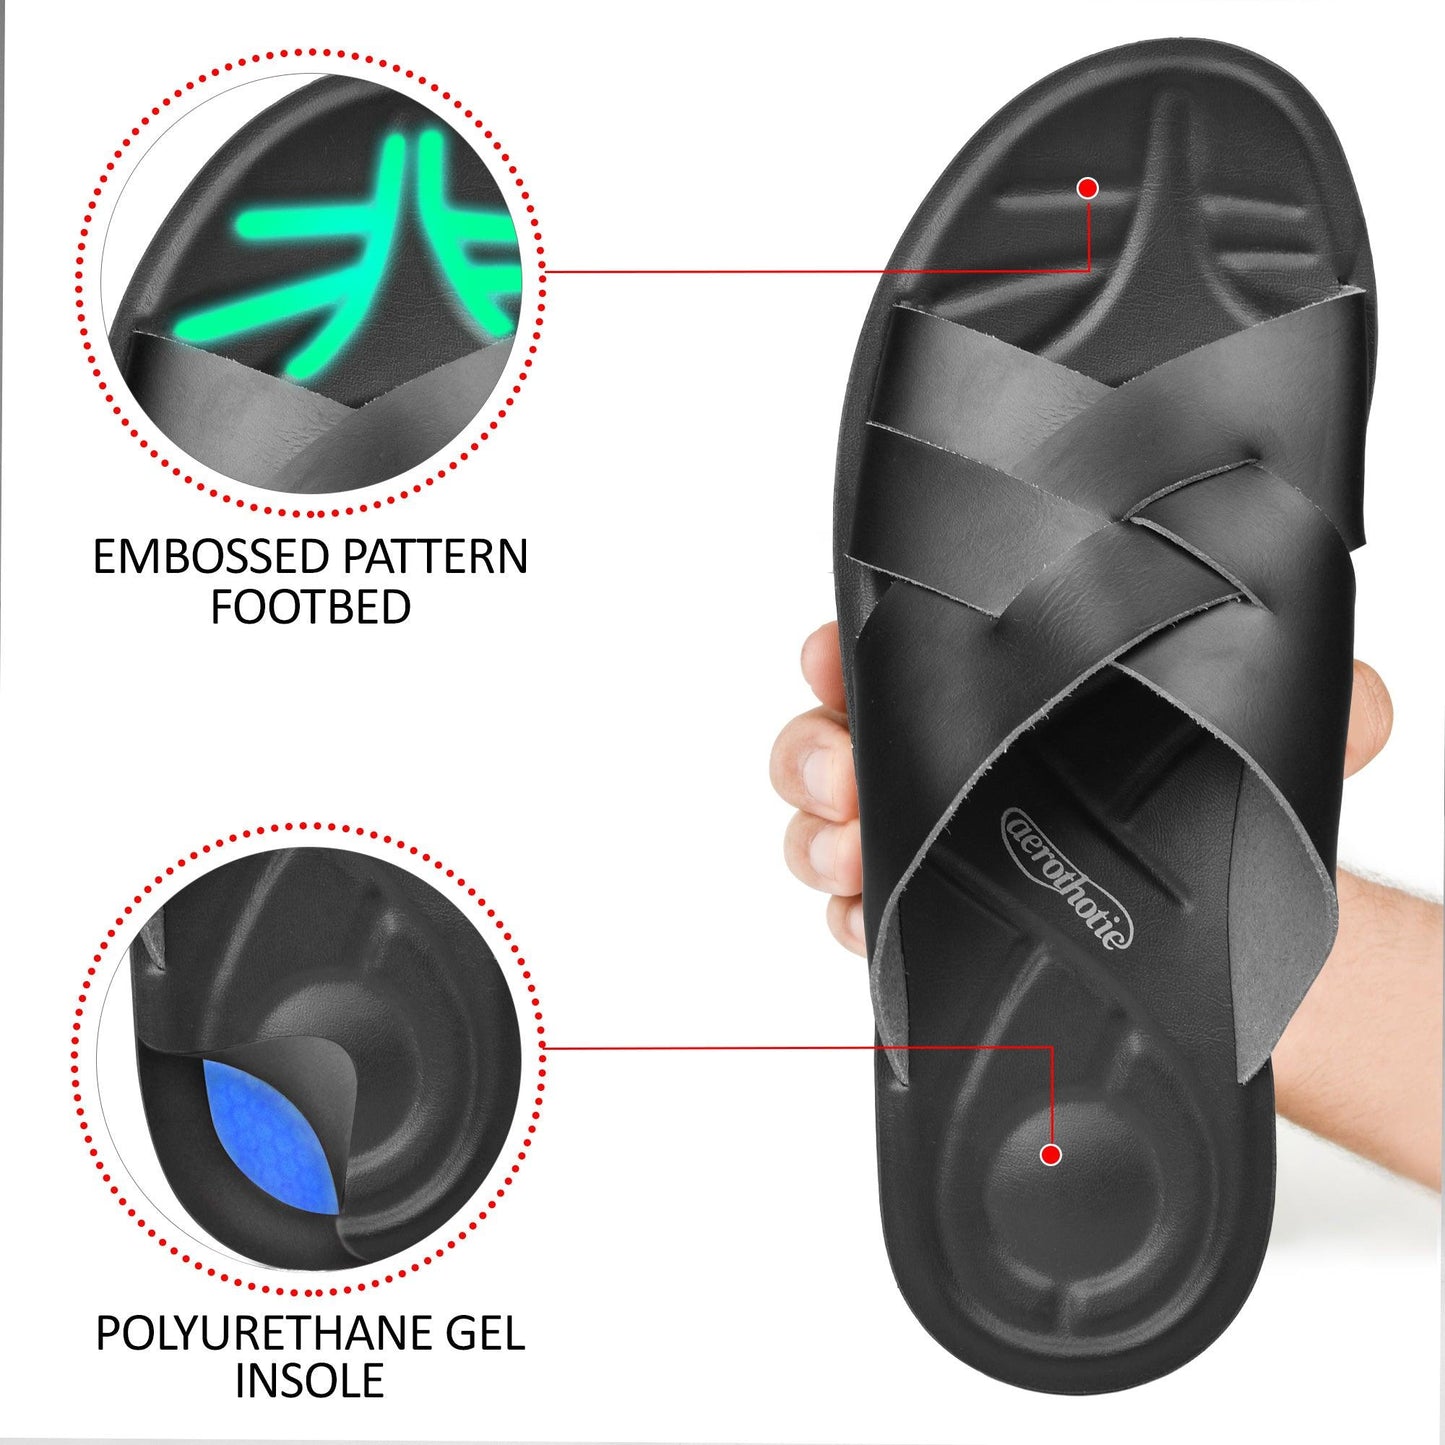 AEROTHOTIC Spruce Men’s Comfortable Fashion Slide Sandals – Original Thailand Imported – M1313